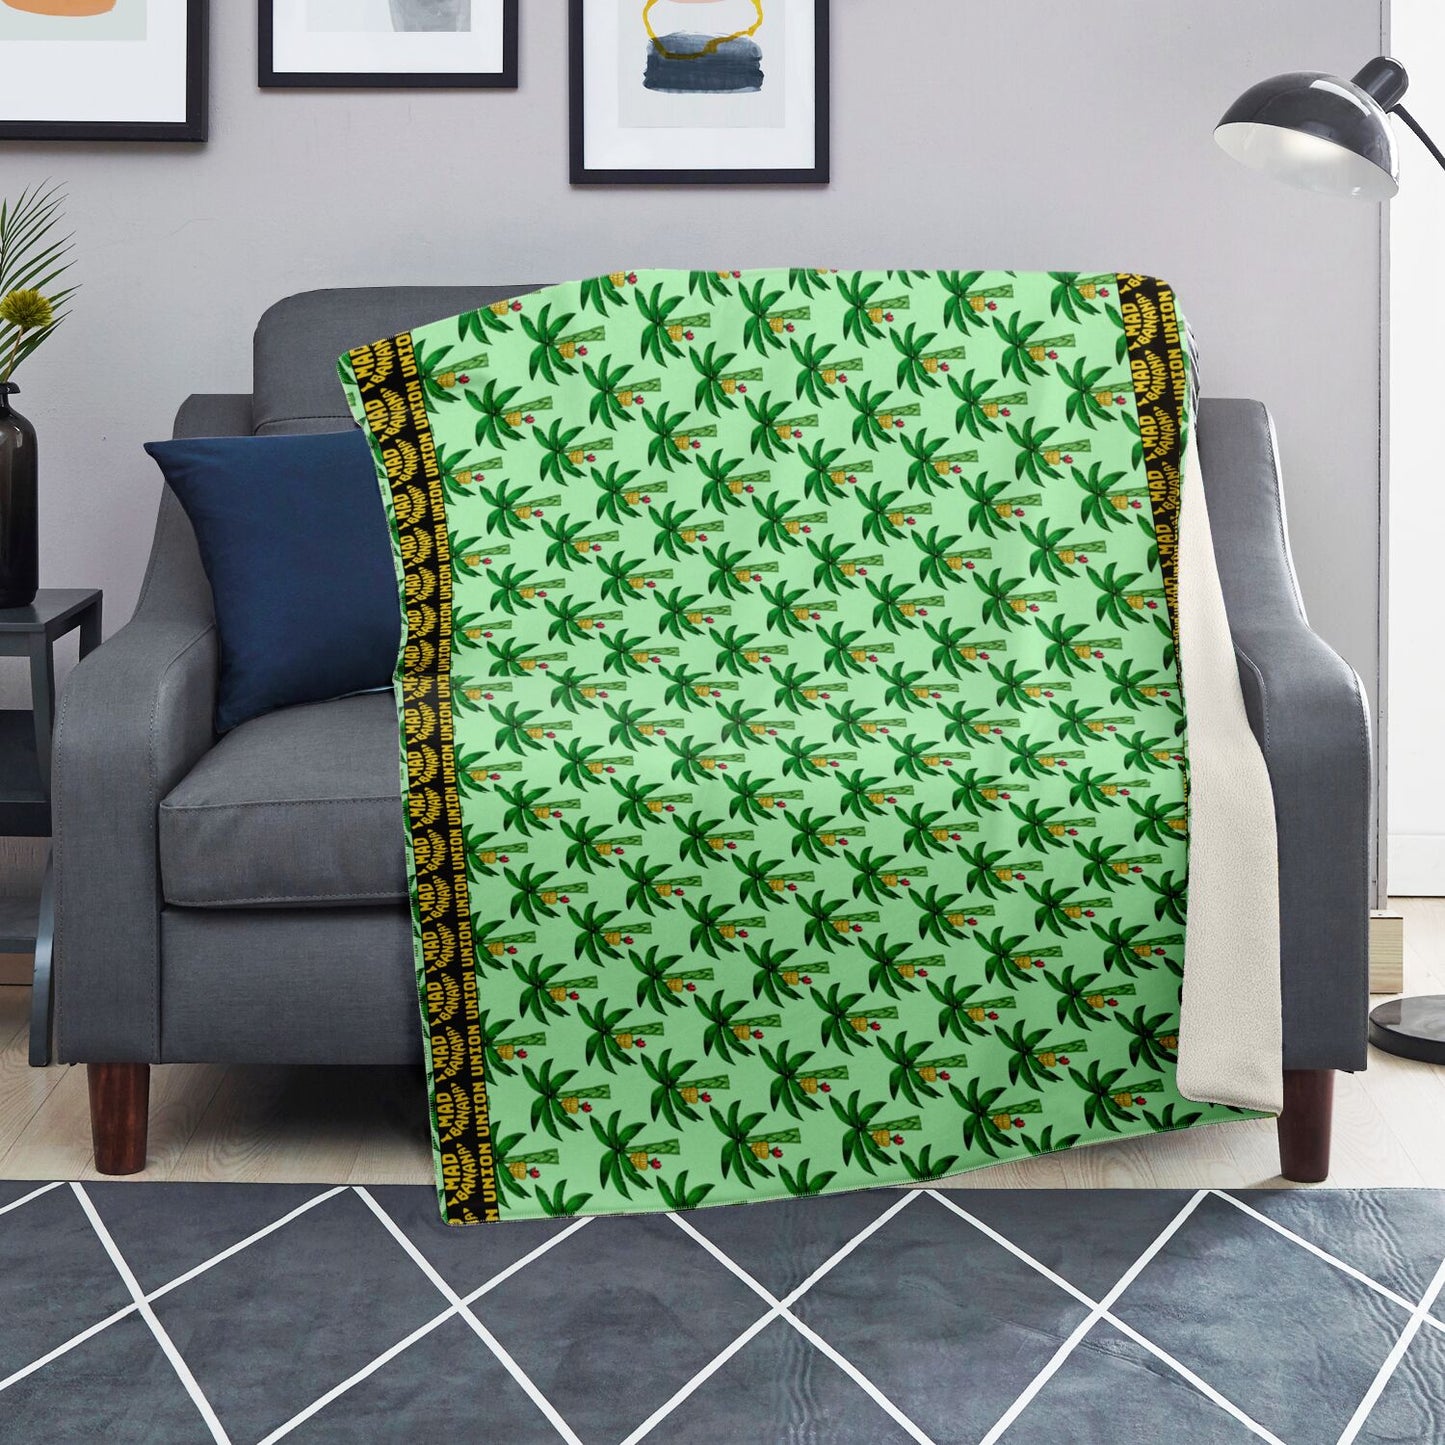 MBU Blanket - Palm Tree Pattern